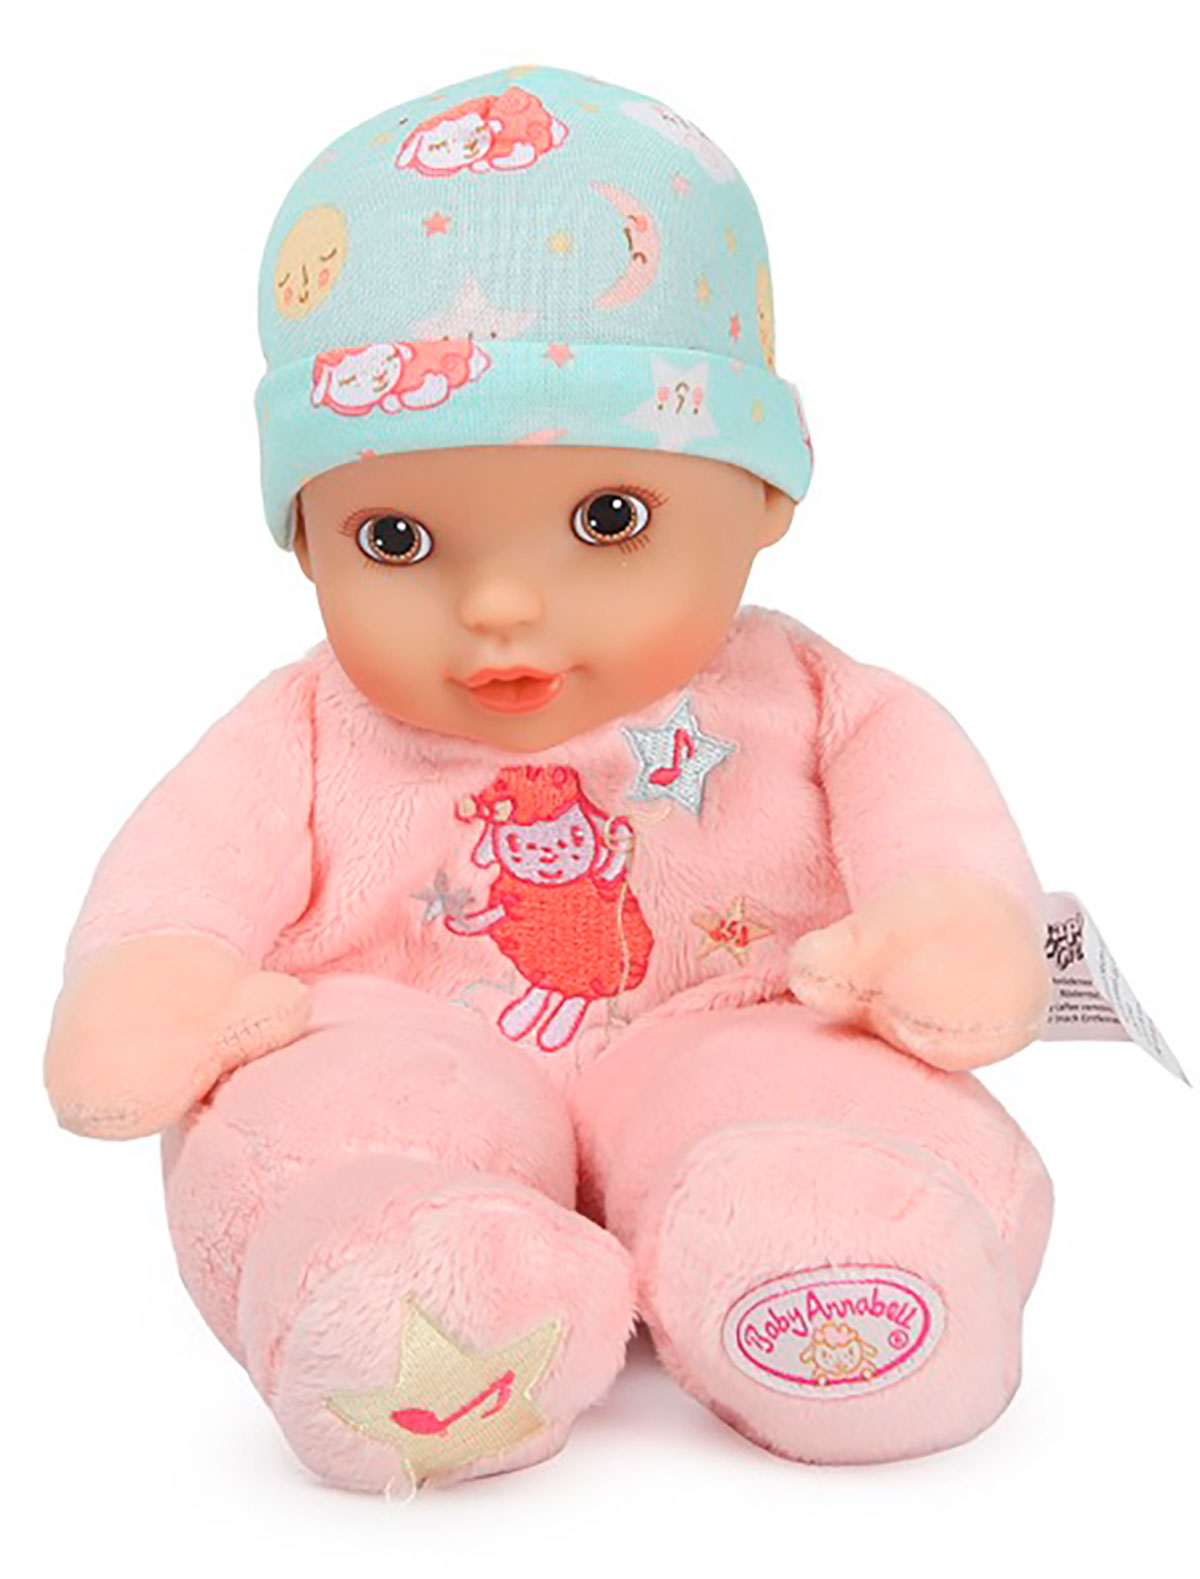 Кукла ZAPF CREATION russia кукла беременная съемный живот с ребенком 30 см b1944729